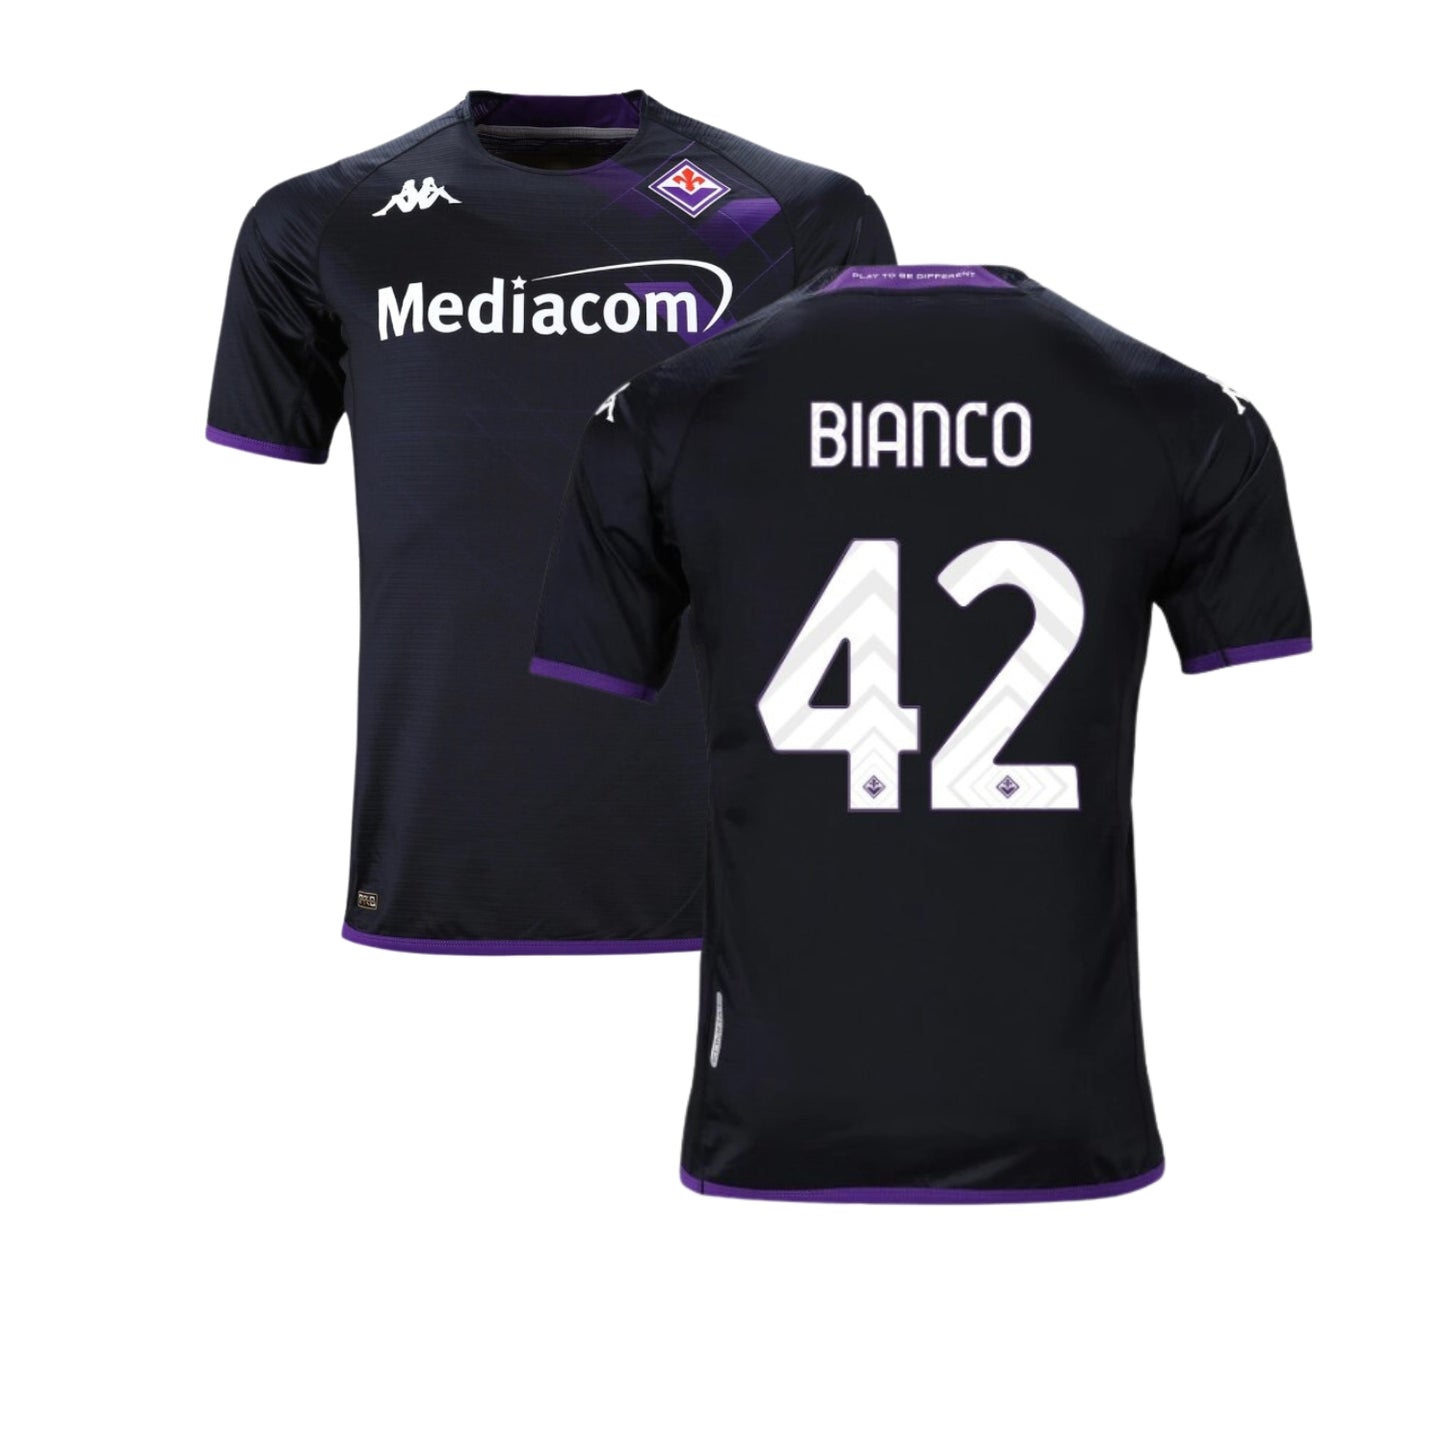 Alessandro Bianco ACF Fiorentina 42 Jersey